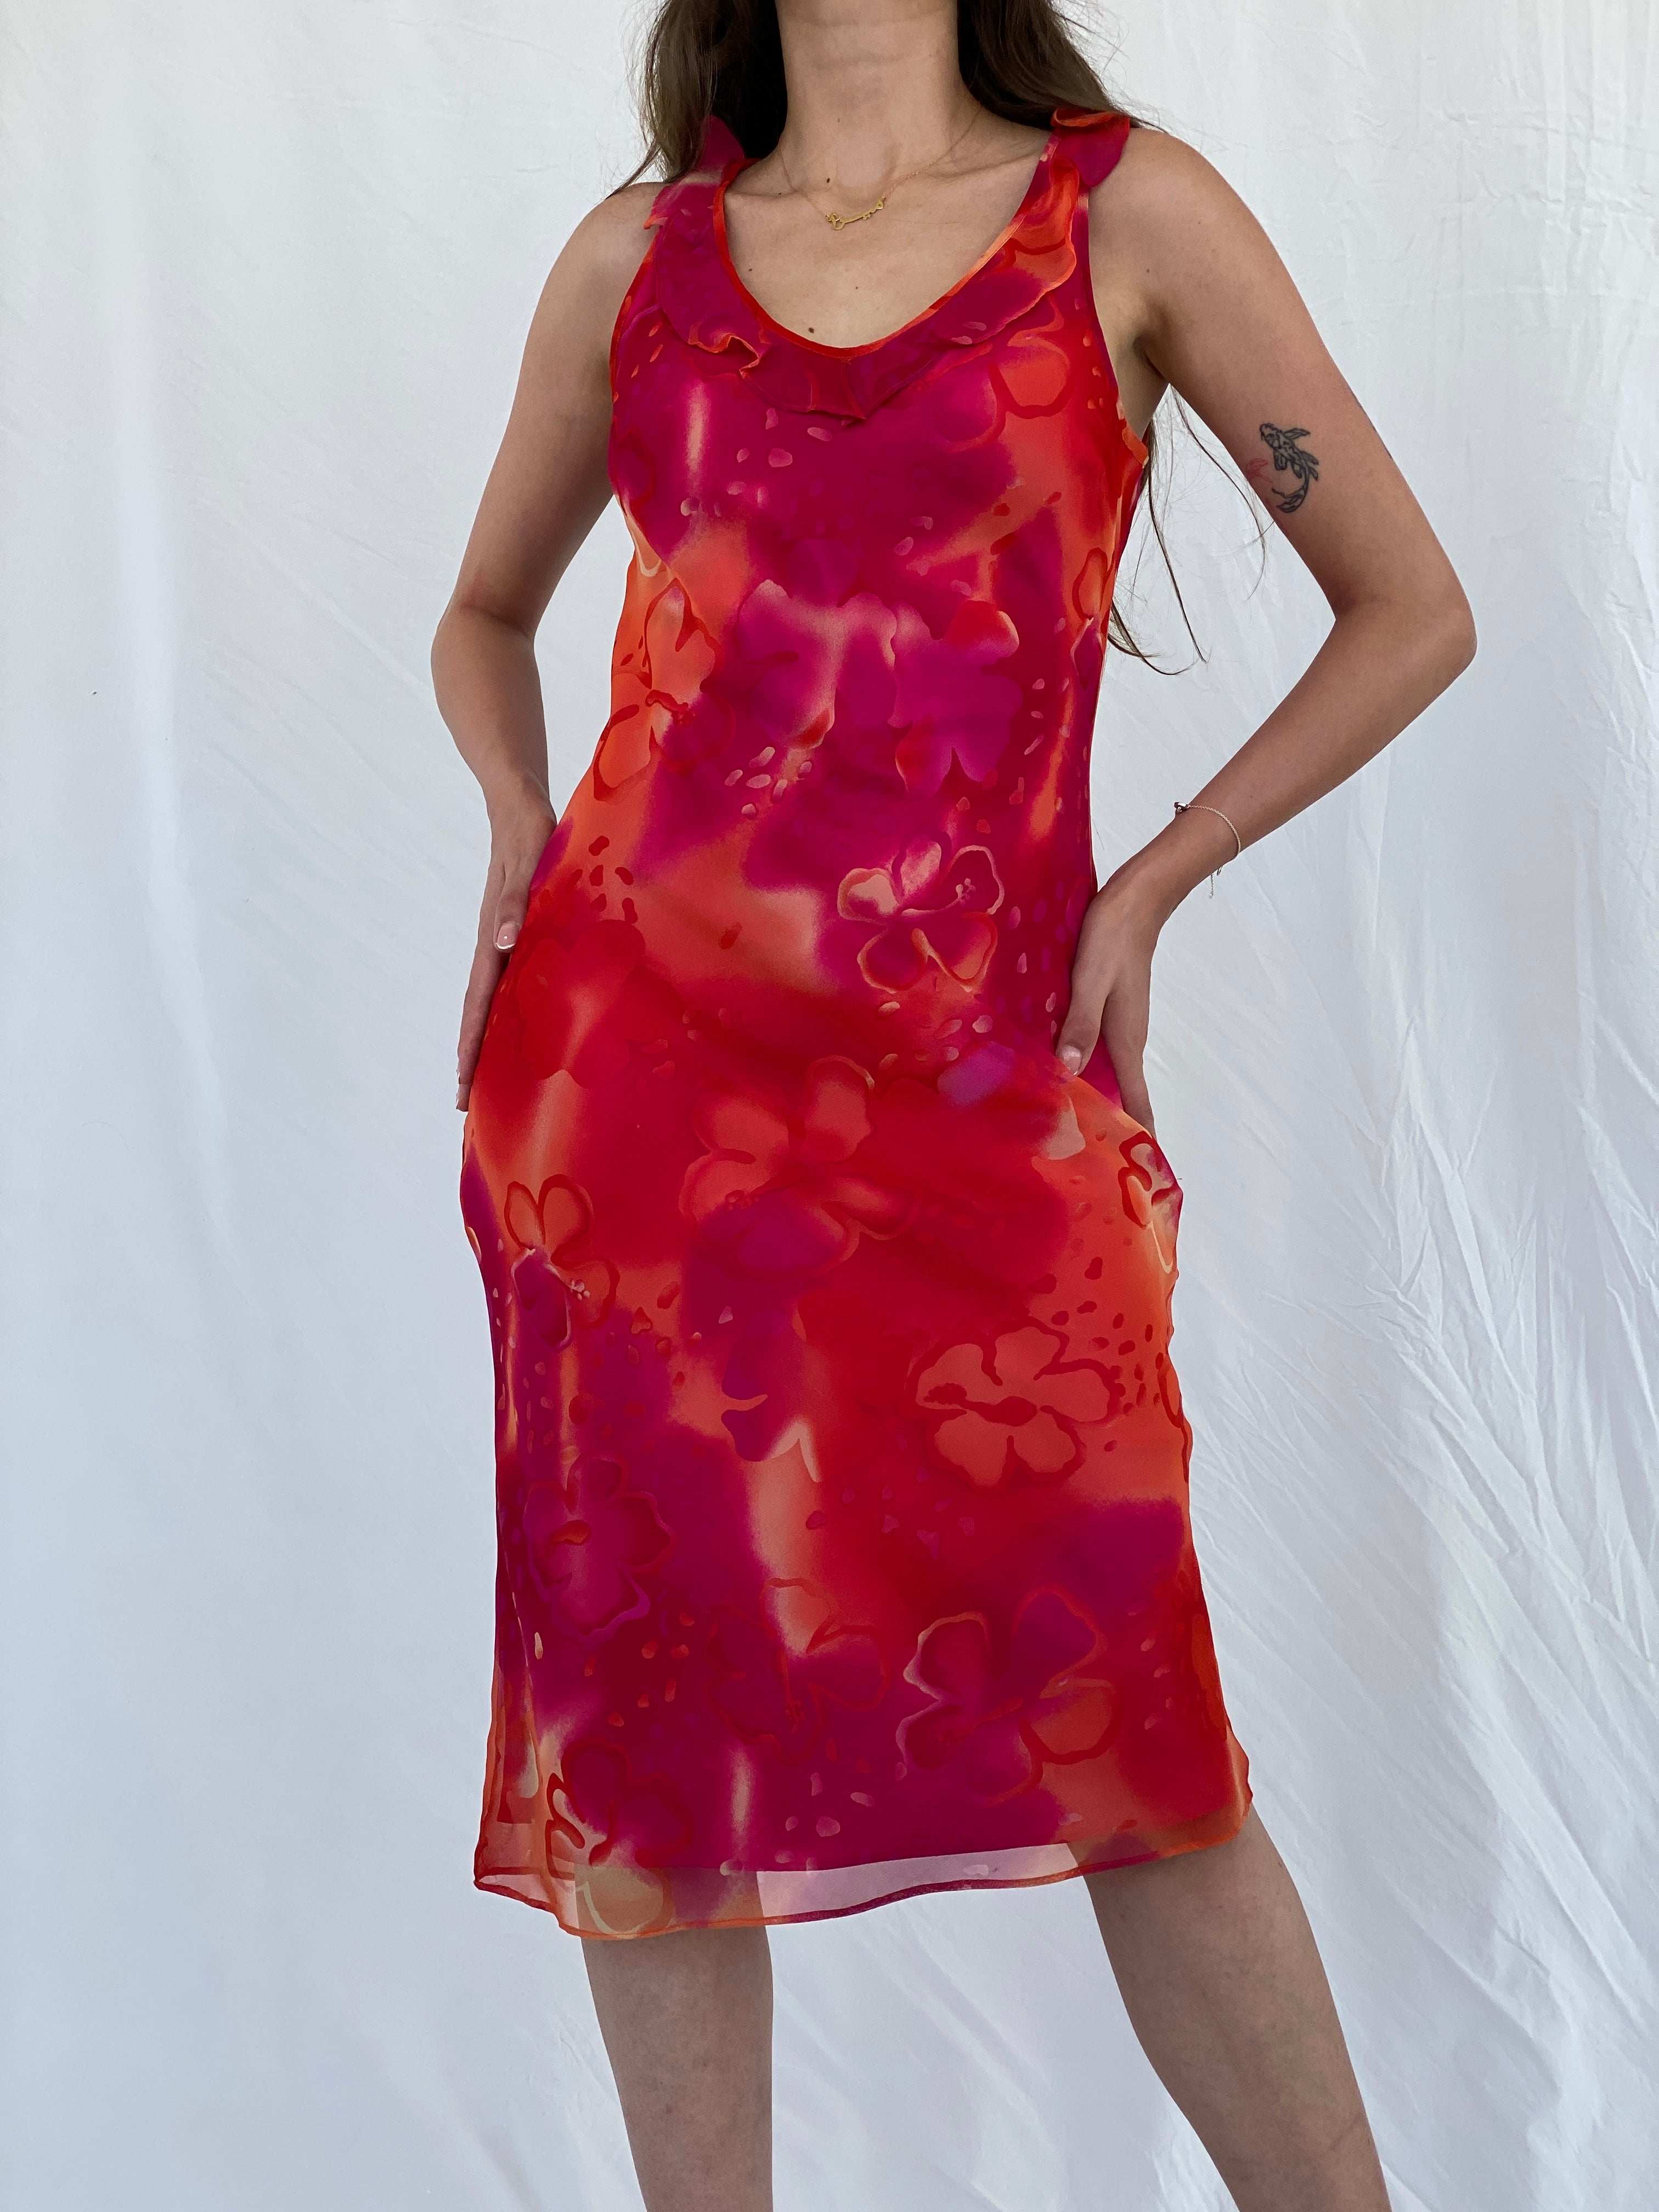 Y2K Cõté Femme Orange & Pink Midi Dress - M - Balagan Vintage Midi Dress 00s, 90s, dress, midi dress, Mira, NEW IN, Wedding Guest